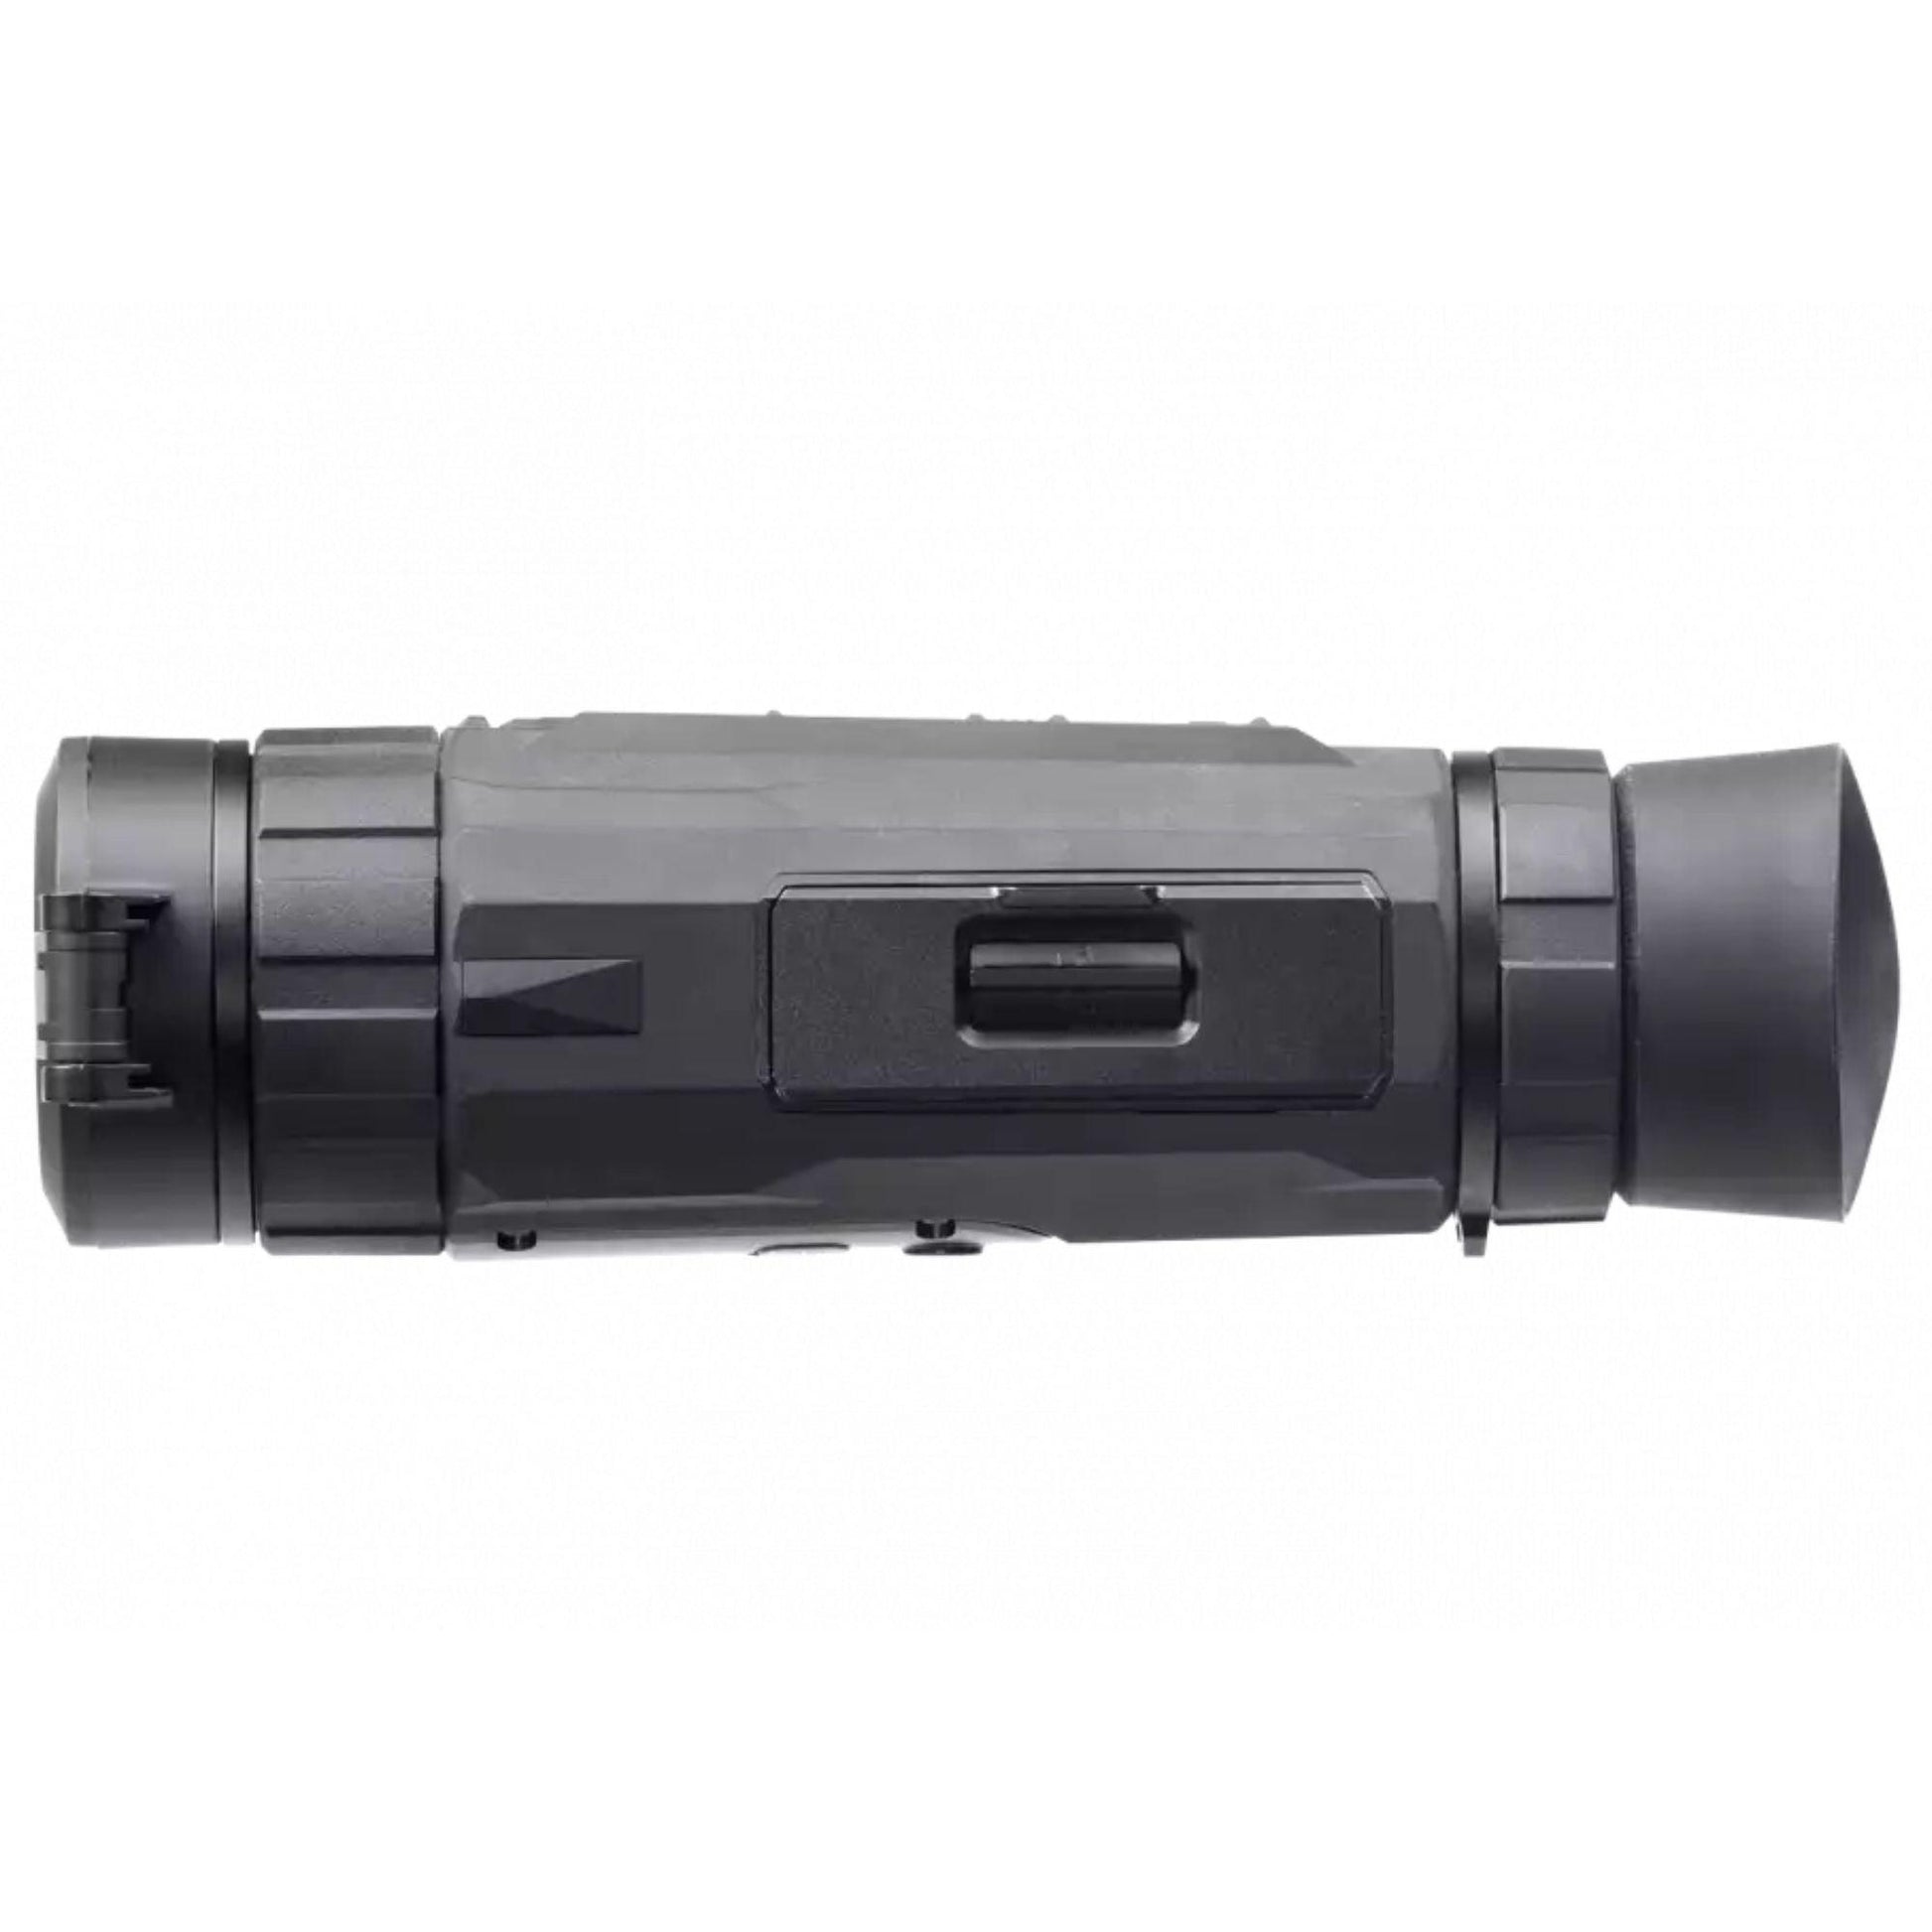 AGM SIDEWINDER TM35-384 - Silverlight Optics